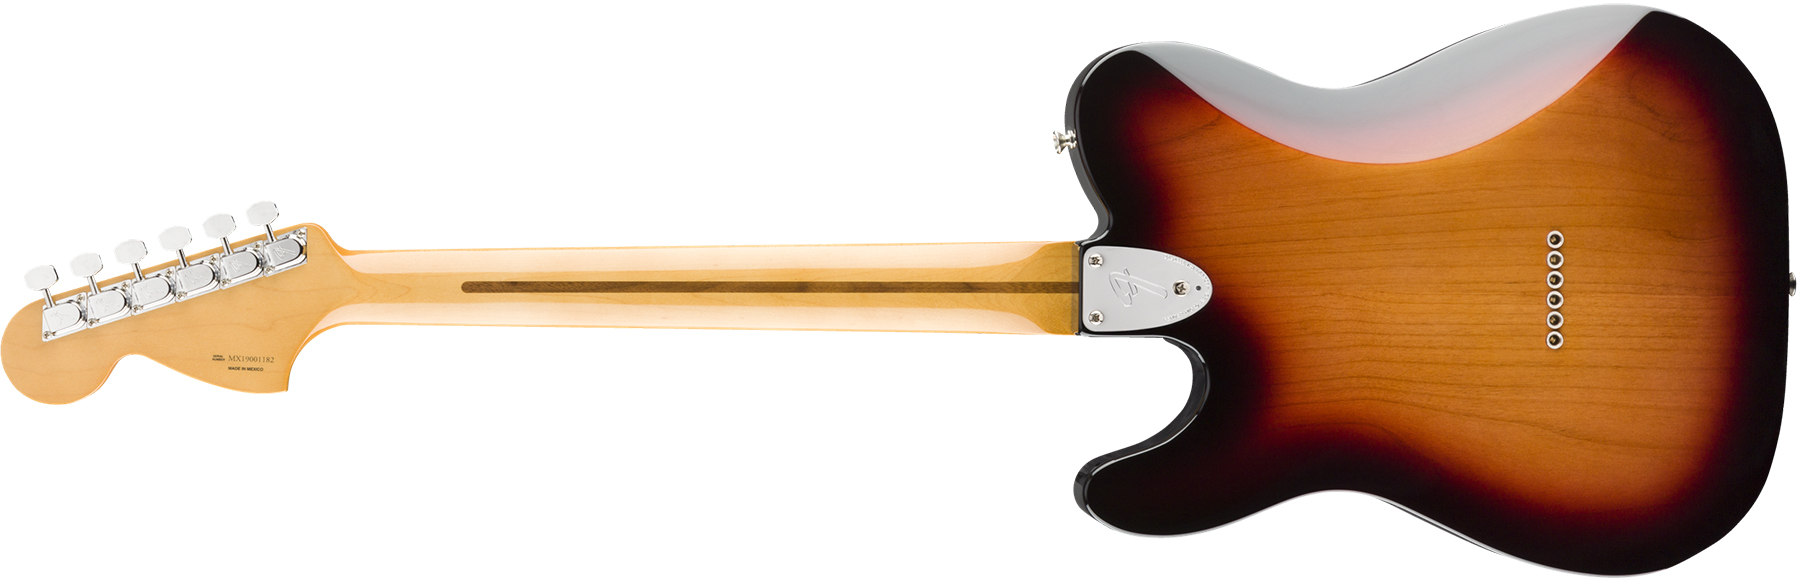 Fender Tele 70s Deluxe Vintera Vintage Mex Mn - 3-color Sunburst - Tel shape electric guitar - Variation 1